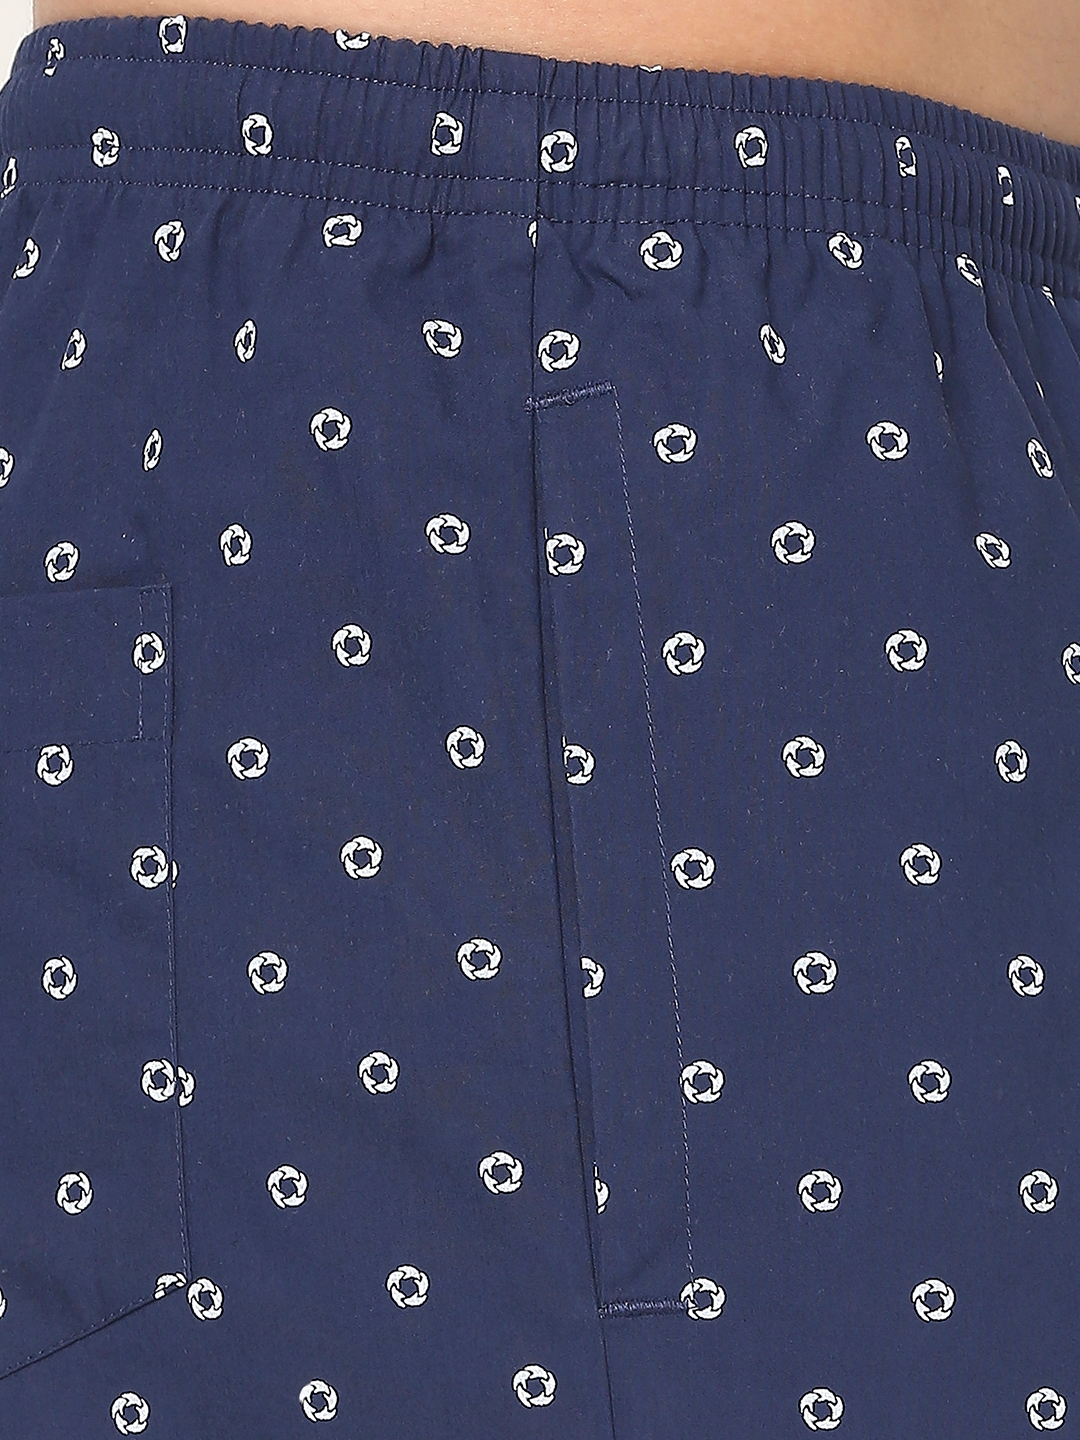 Underjeans by Spykar Premium Cotton Printed Men Navy Pyjama